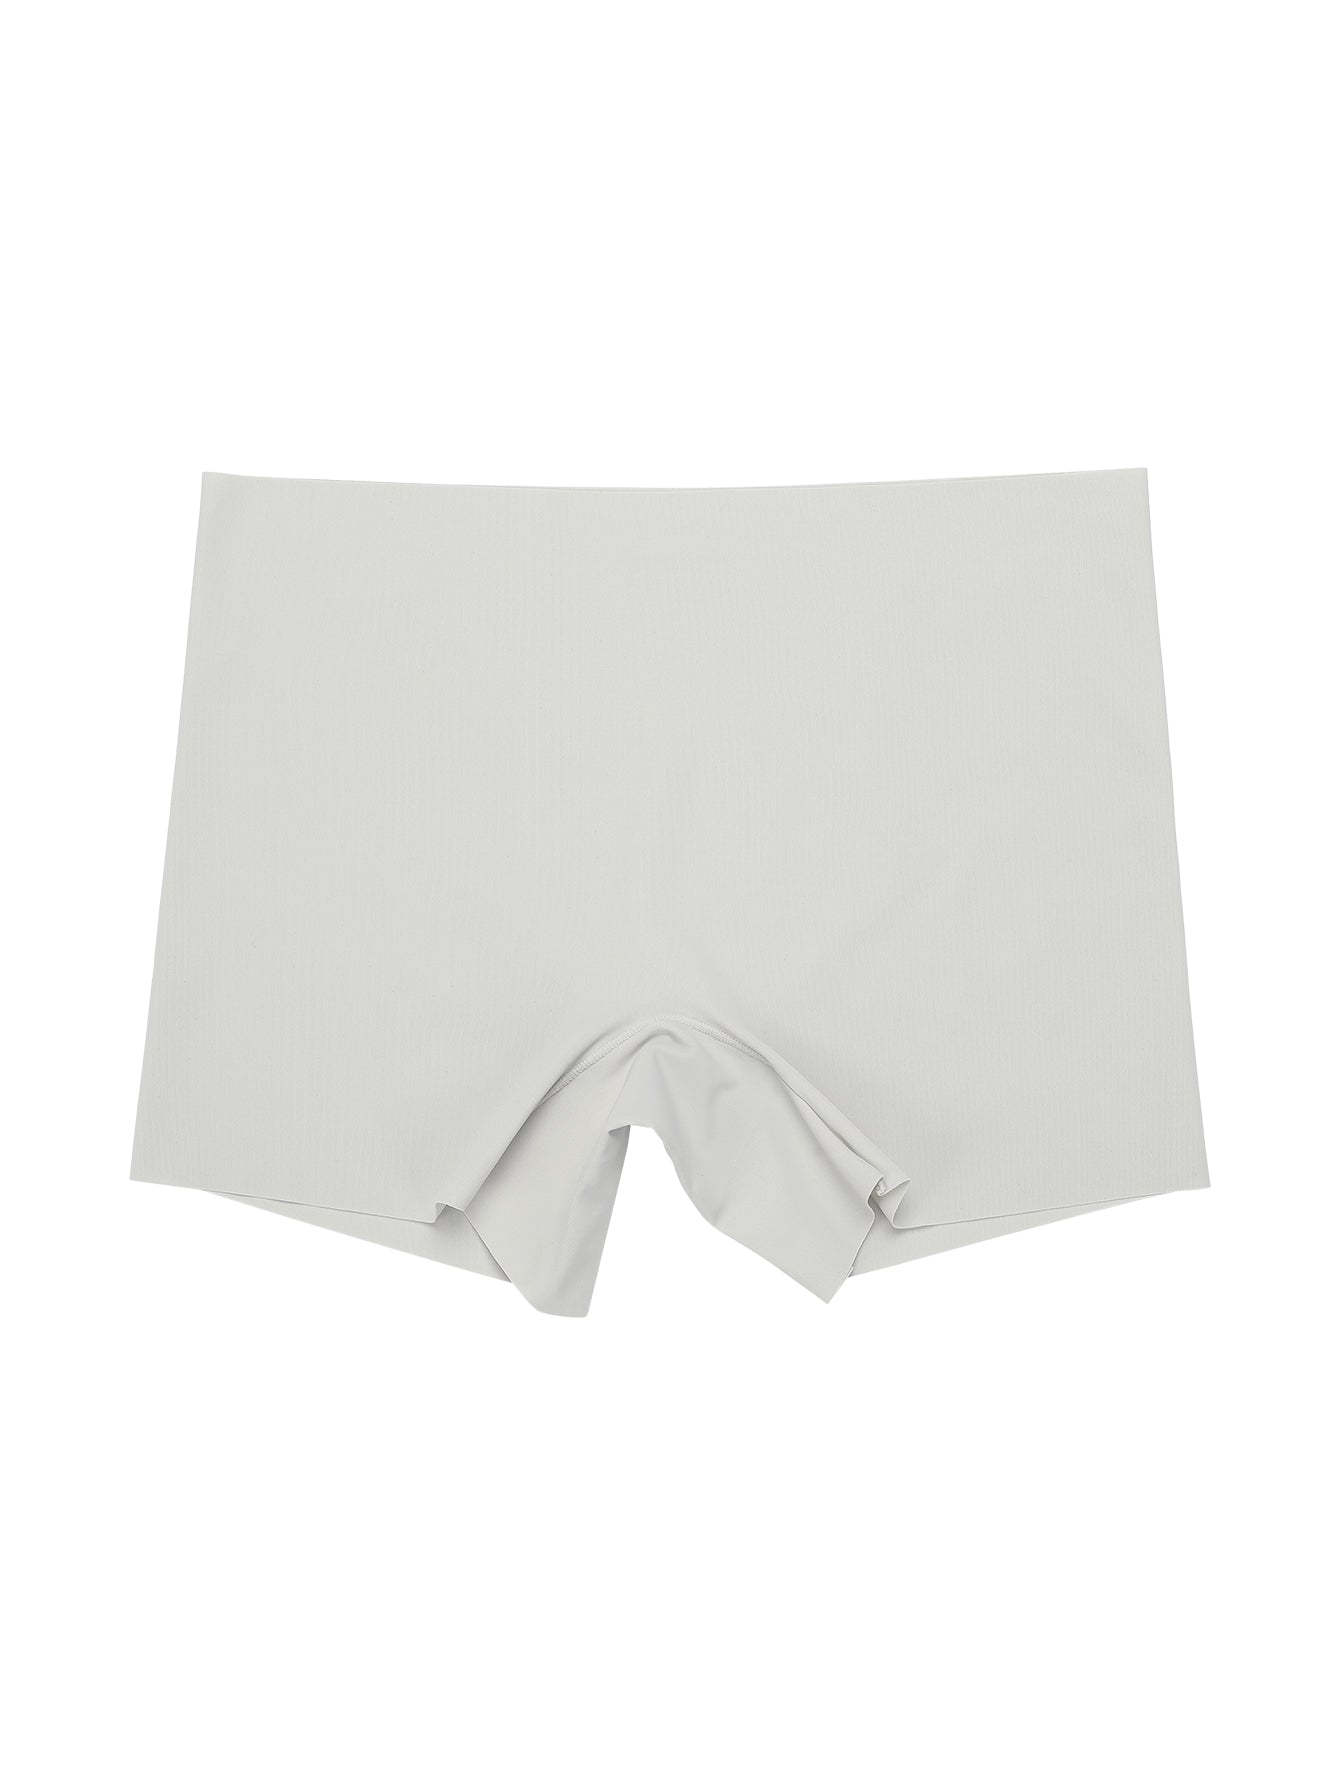 4 Pack Women's Boyshort Underwear Seamless Panties Boxer Briefs Sai Feel